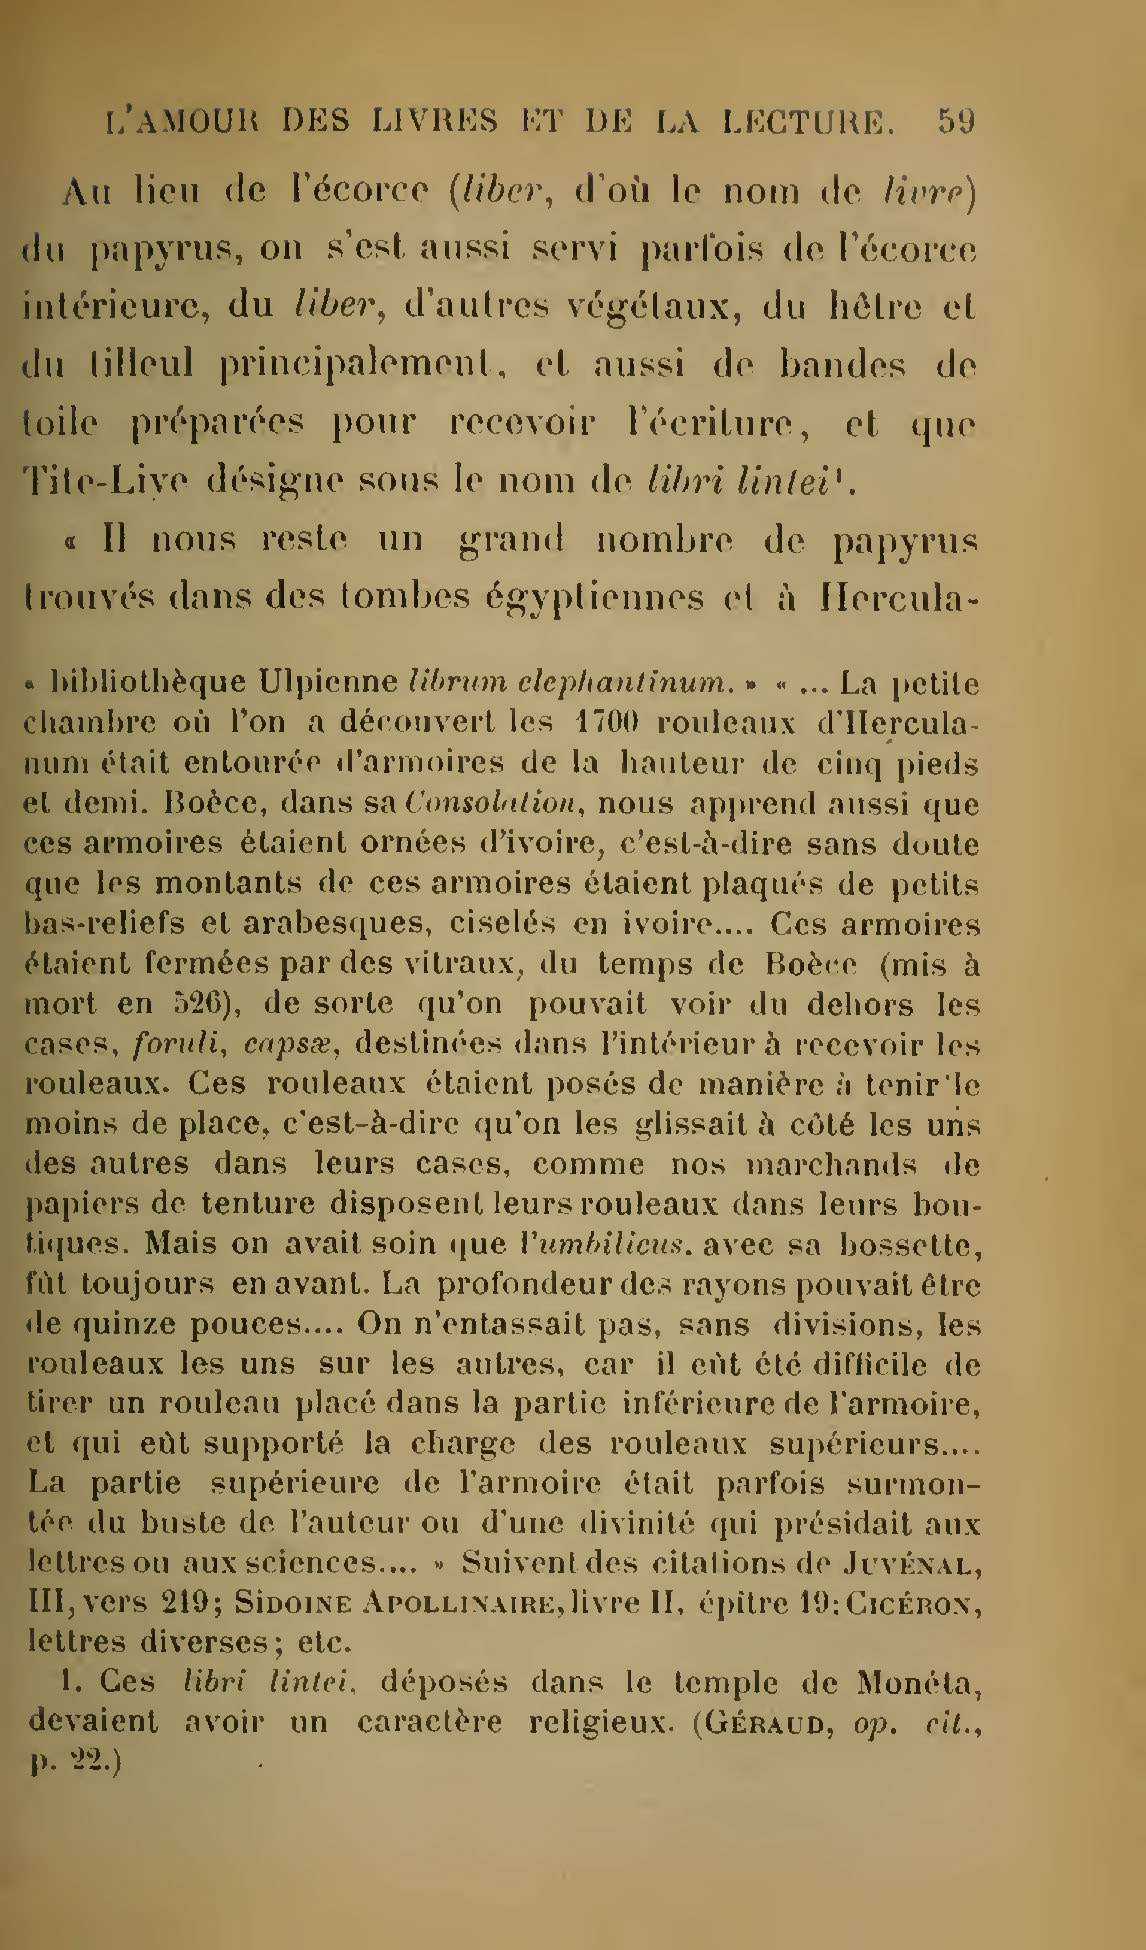 Albert Cim, Le Livre, t. I, p. 59.